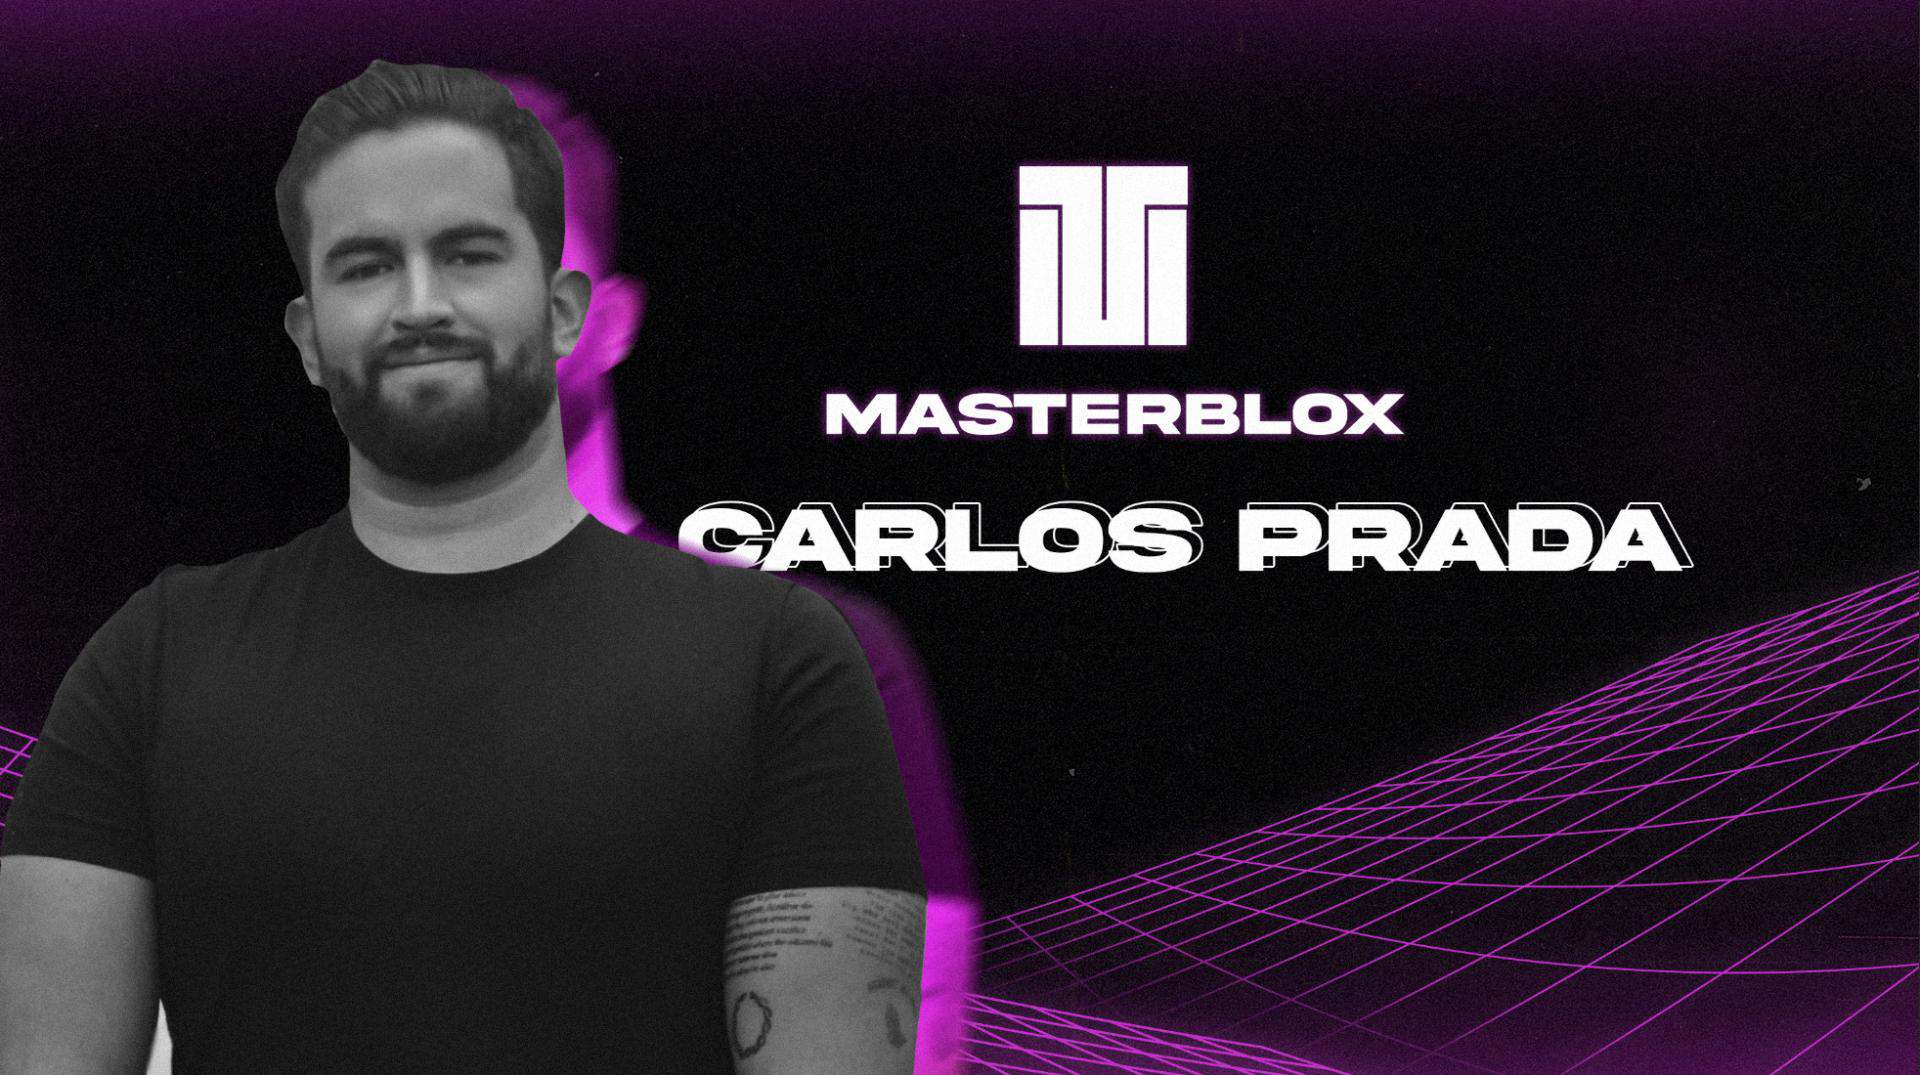 Carlos-prada-announces-new-products-for-defi-agency-masterblox